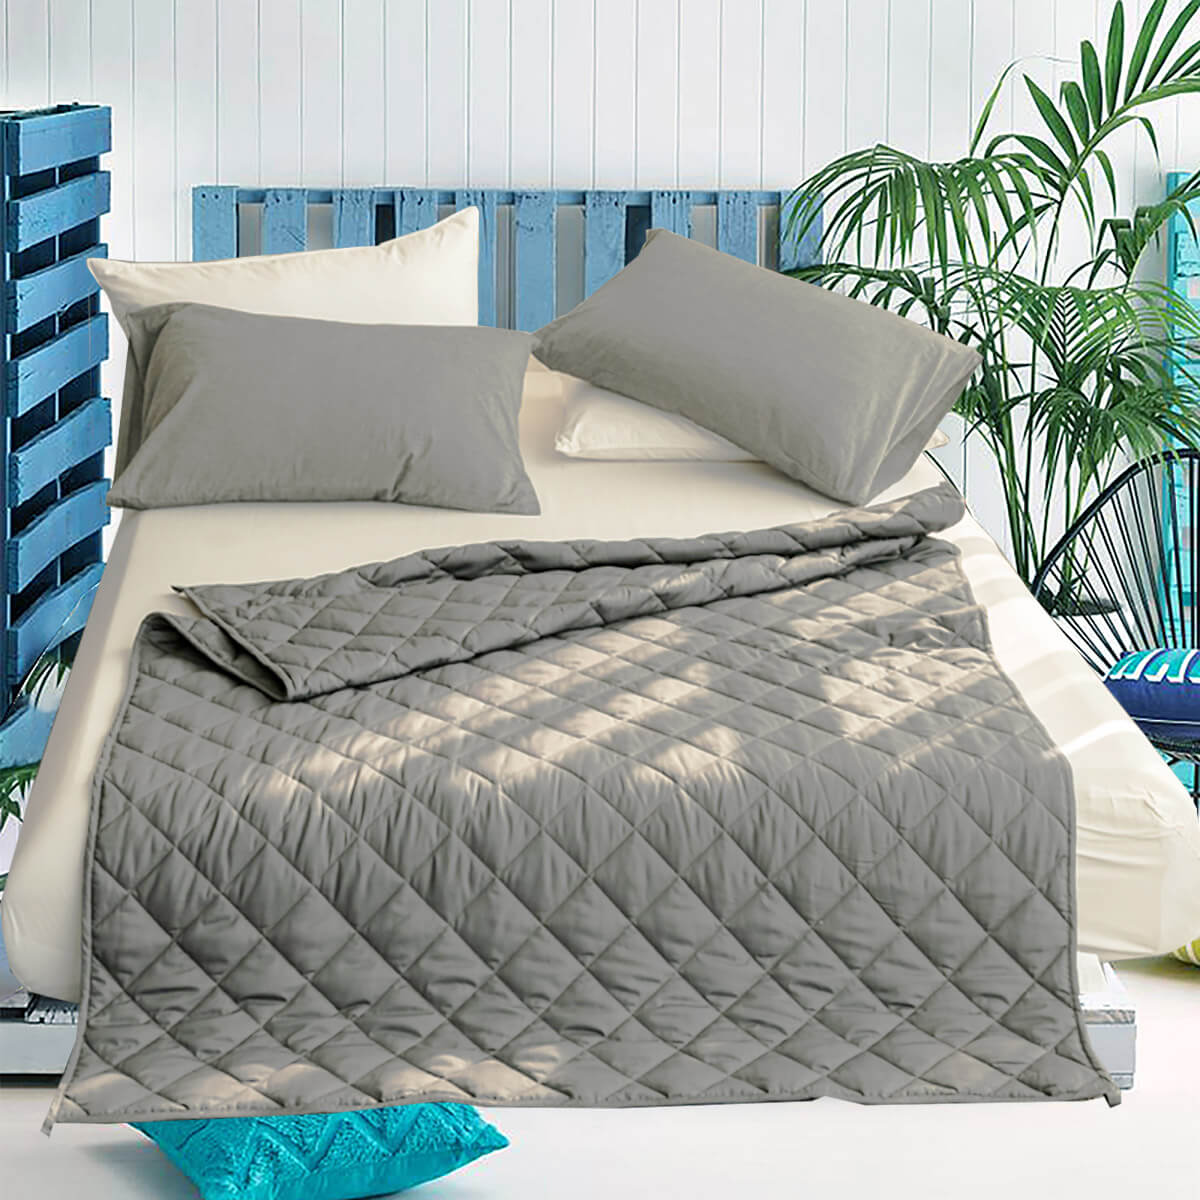 Znl Weighted Blanket Canada Bedding Set Pillow Linens Duvet Cover